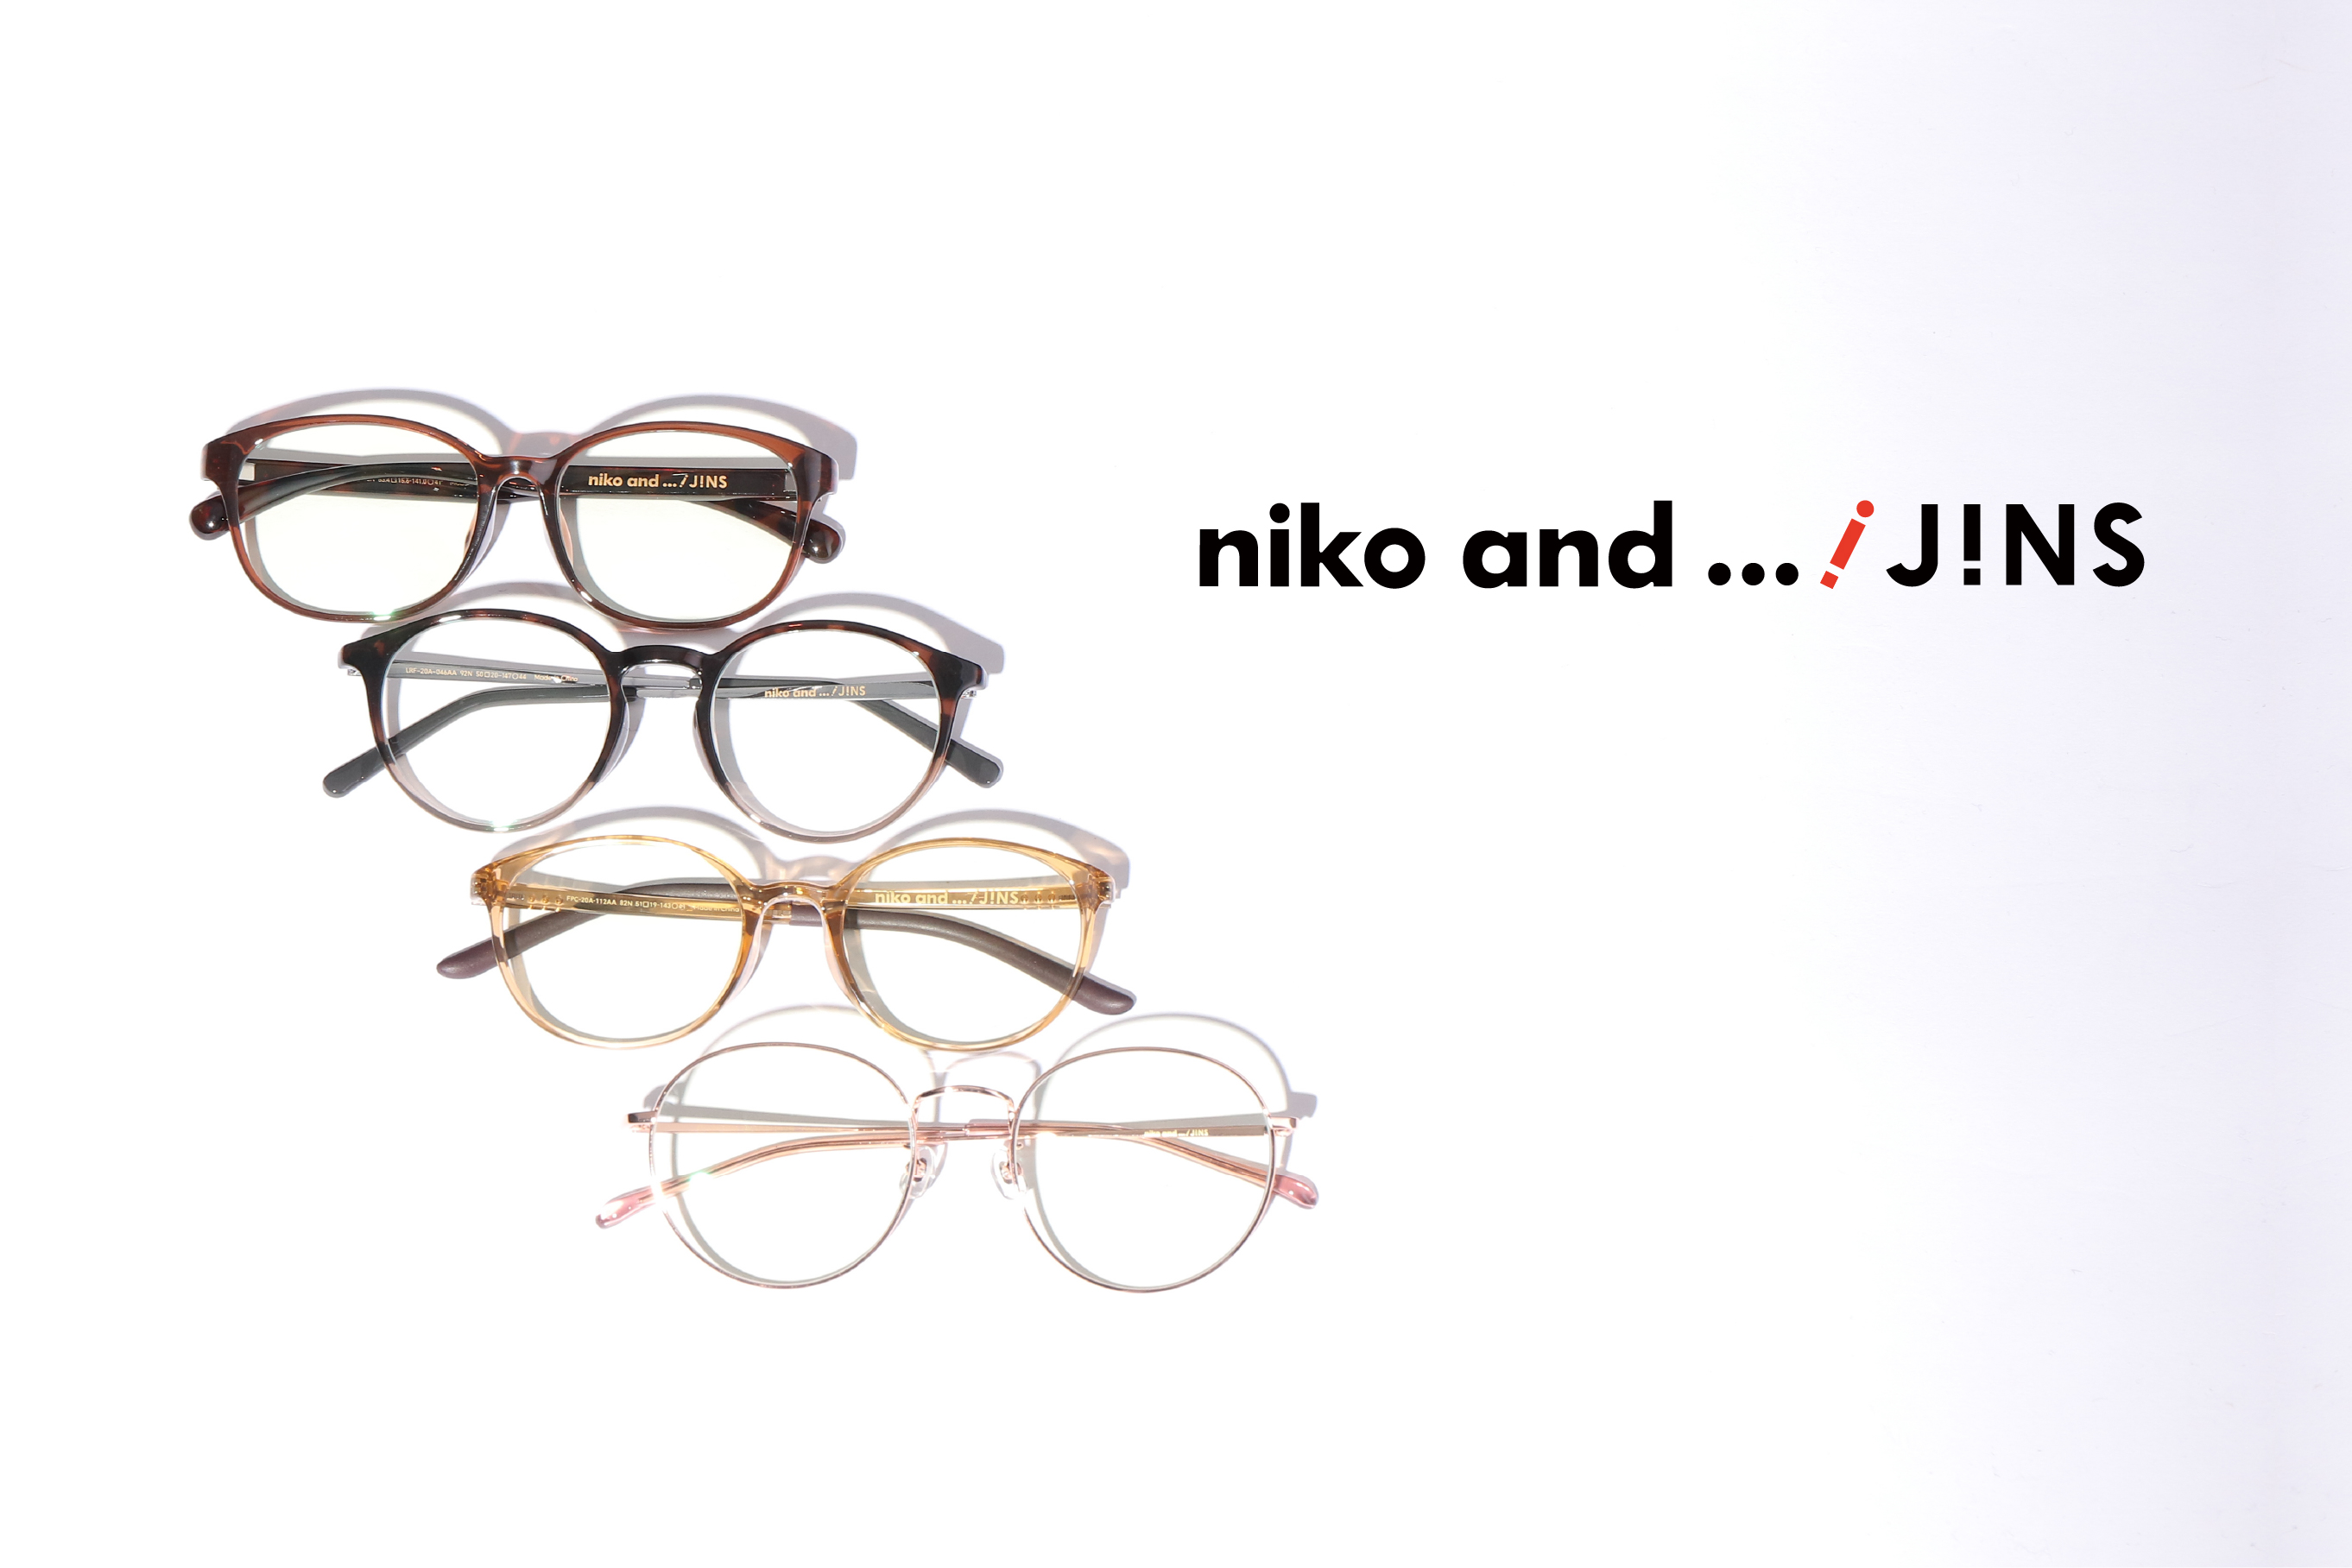 niko and ×JINS大好評コラボの新作が10月1日(木)より販売スタート 